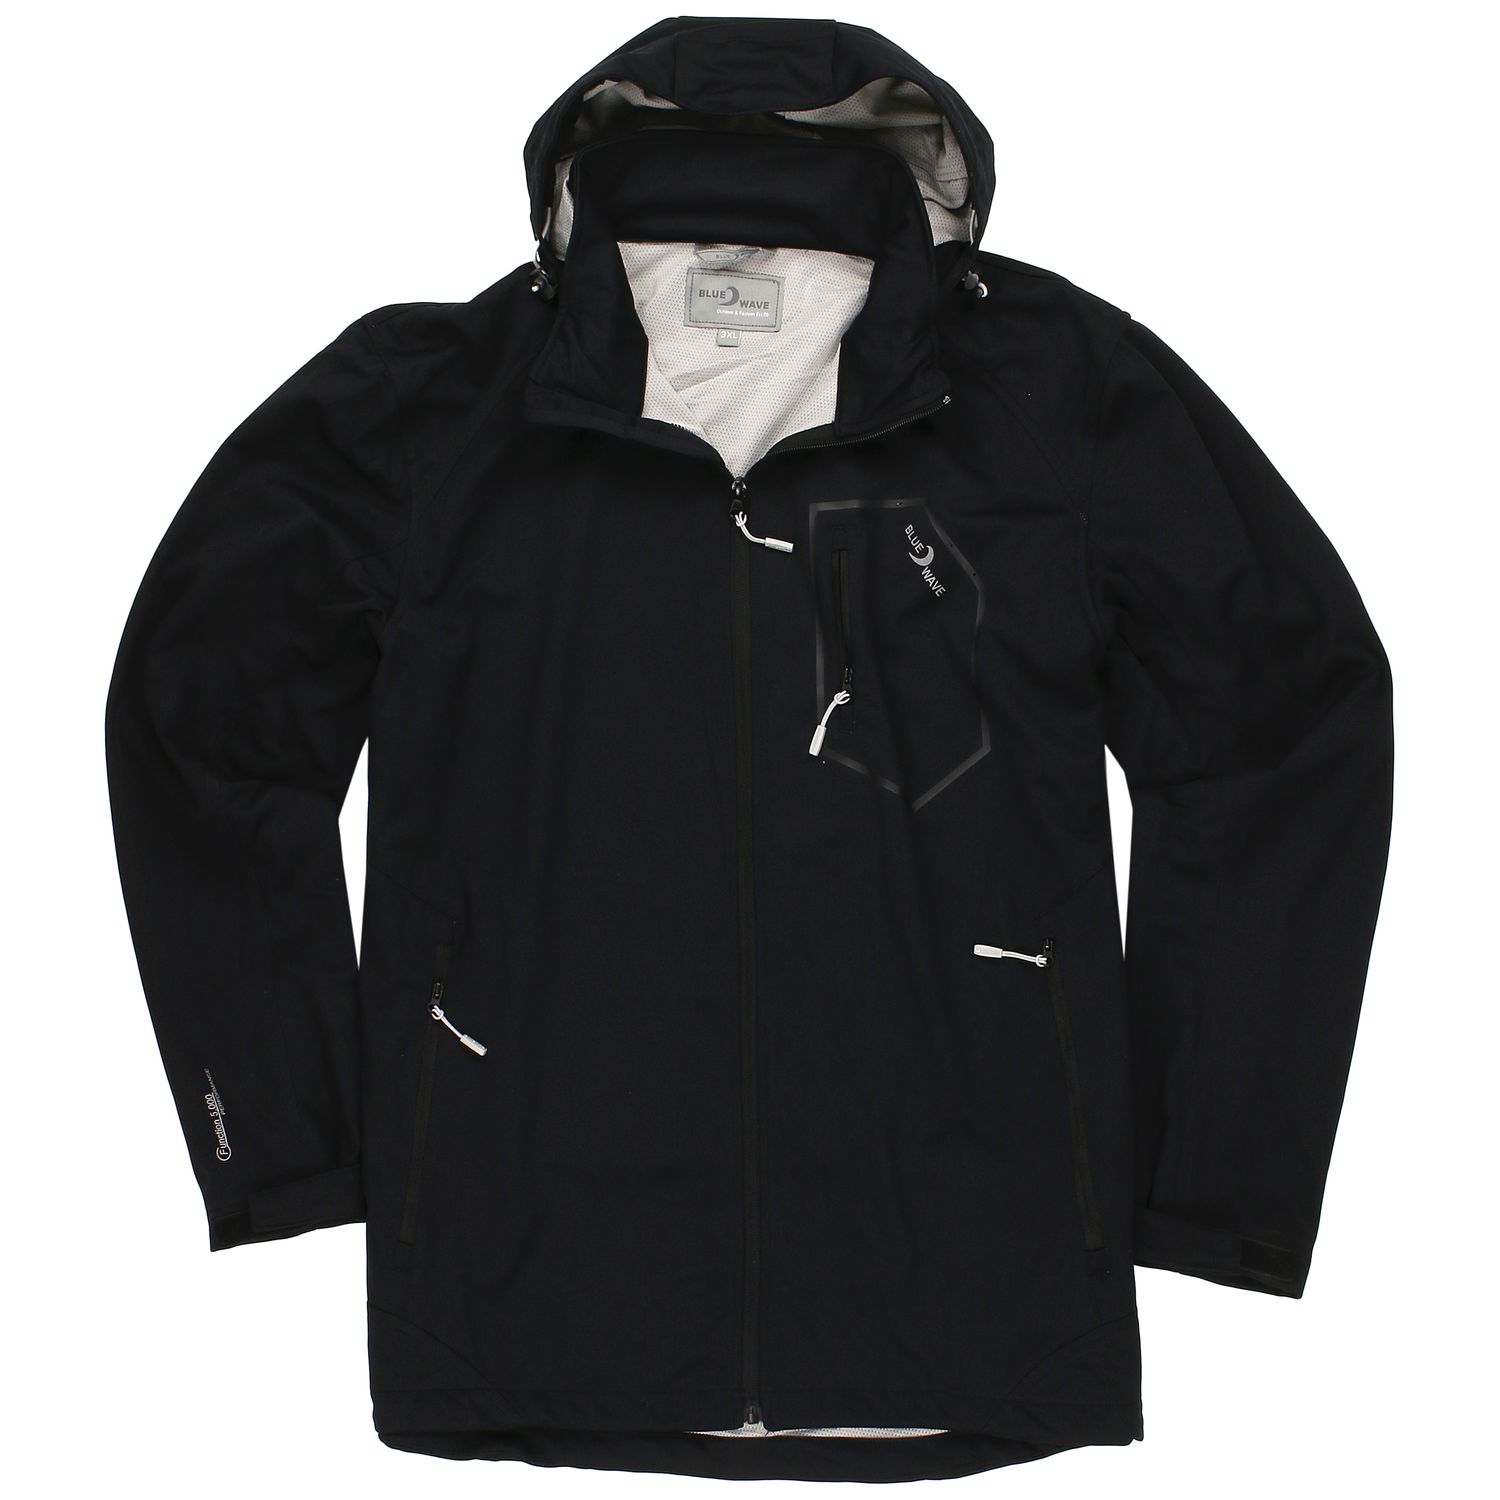 Softshell jacket "Holger" for men in black by Blue Wave up to oversize 8XL